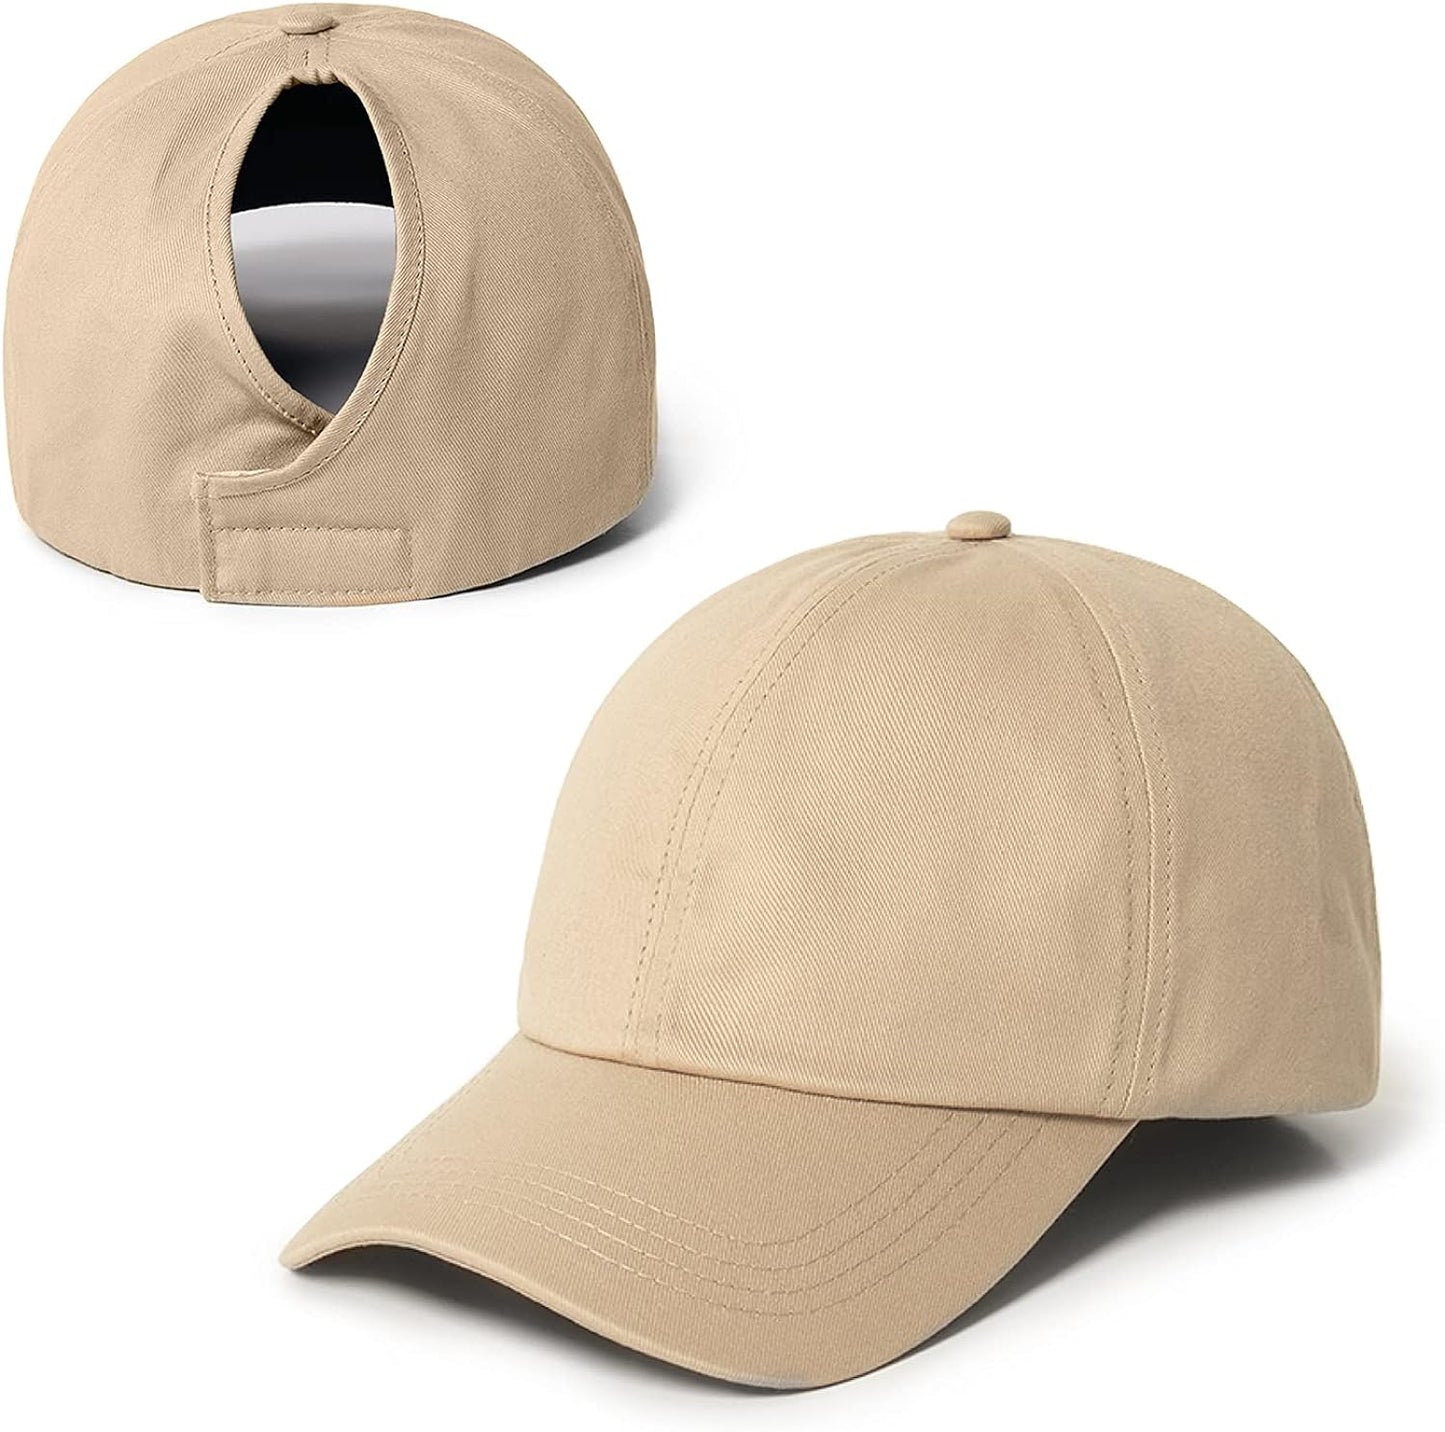 Satin-Lined Ponytail Cap - Designed for Women with Curly Hair, Ponytail Hats for Women, Curly Hair Baseball Cap